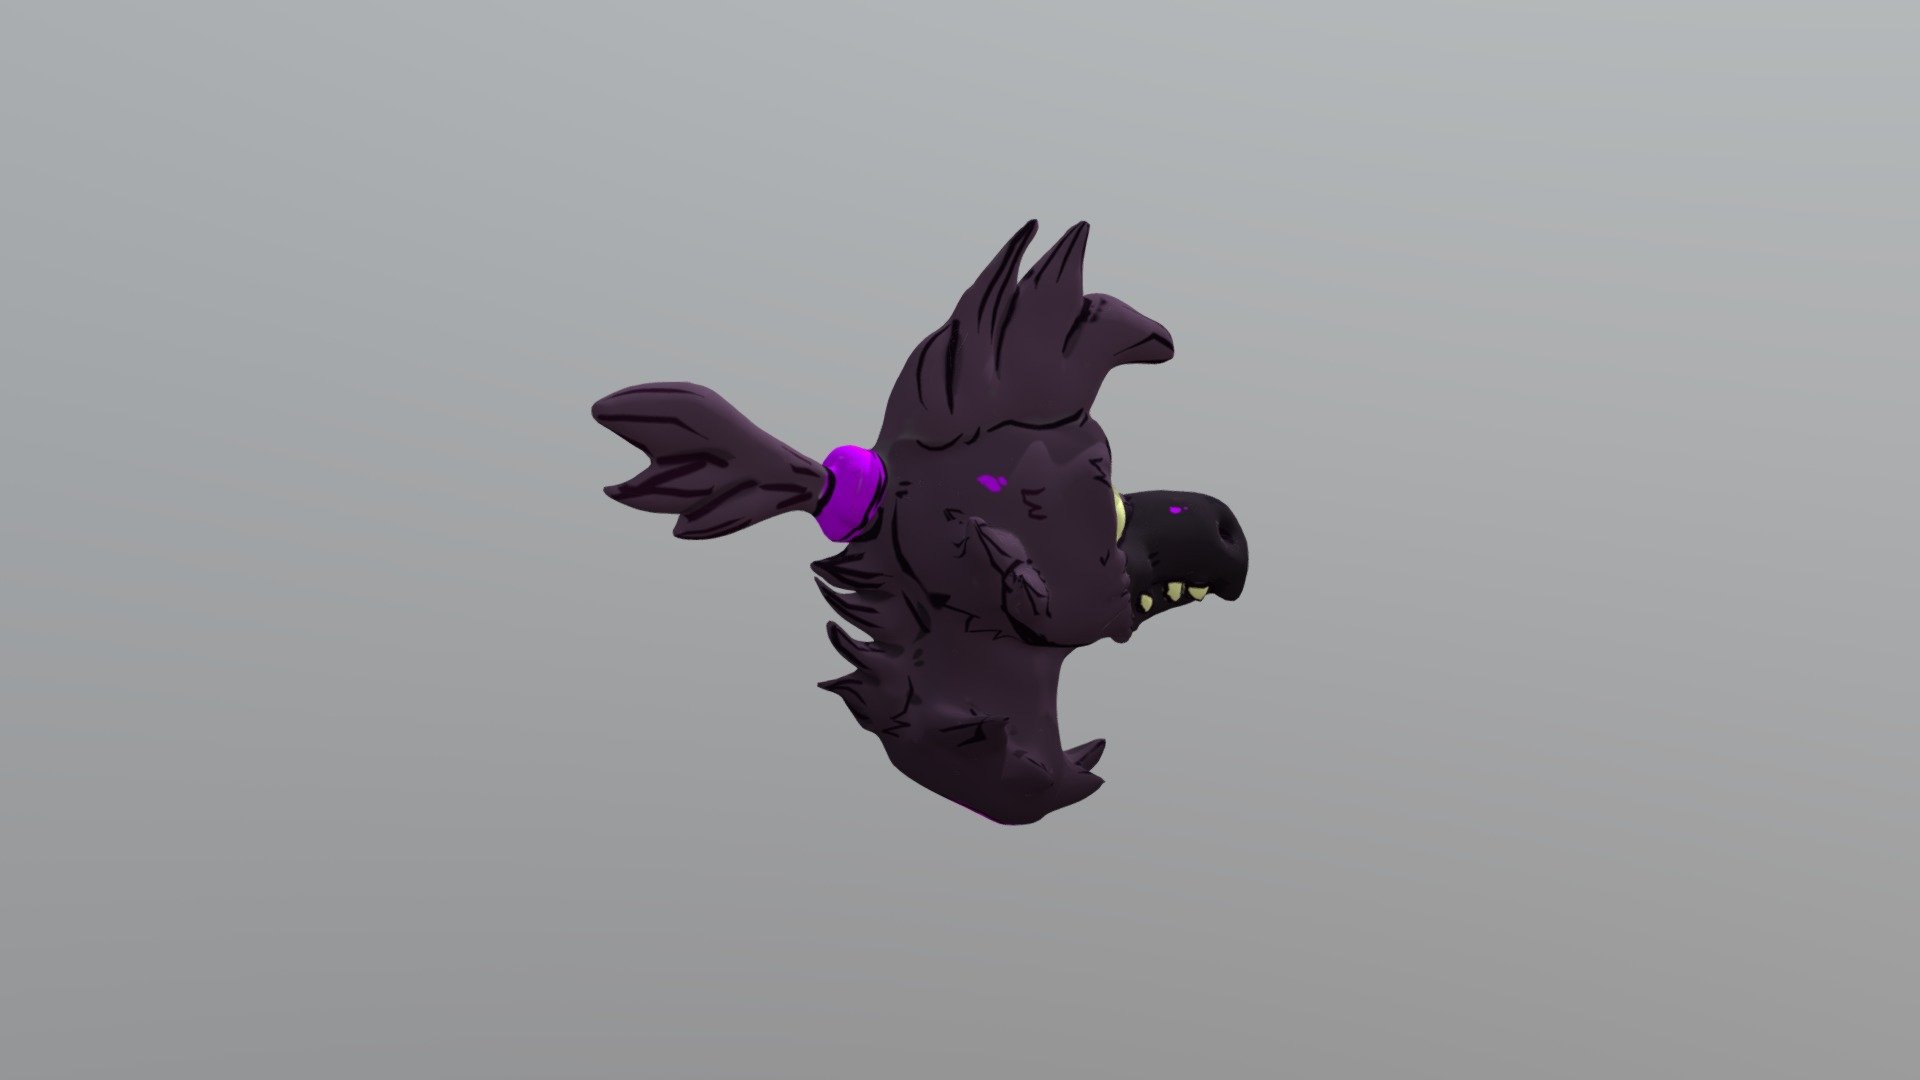 Raven headshot